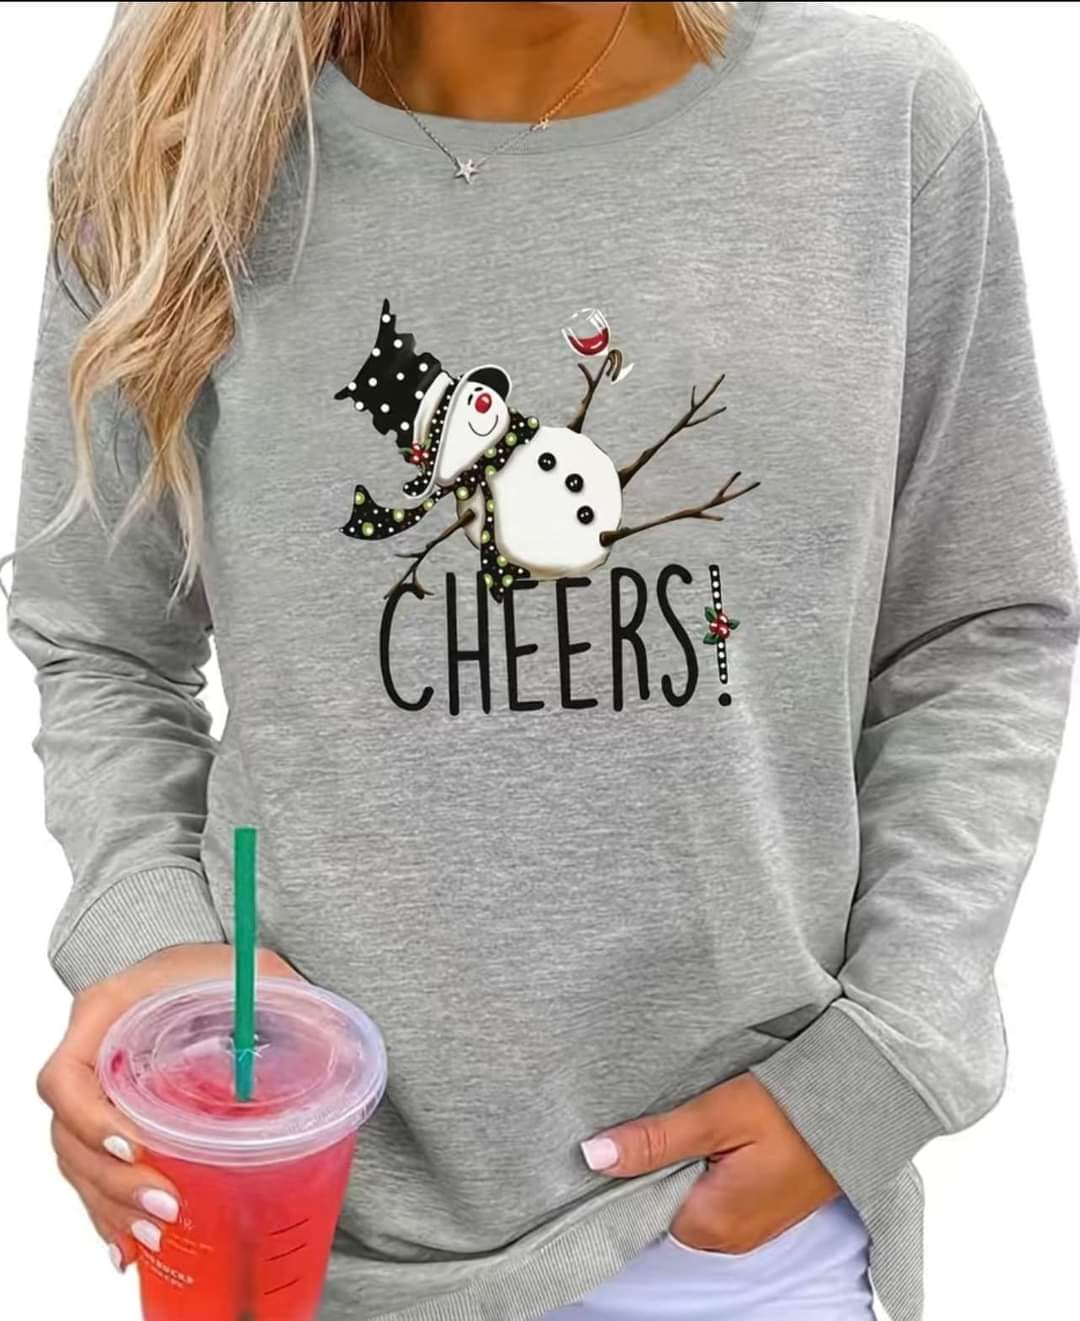 Cheers Crewneck Sweatshirt